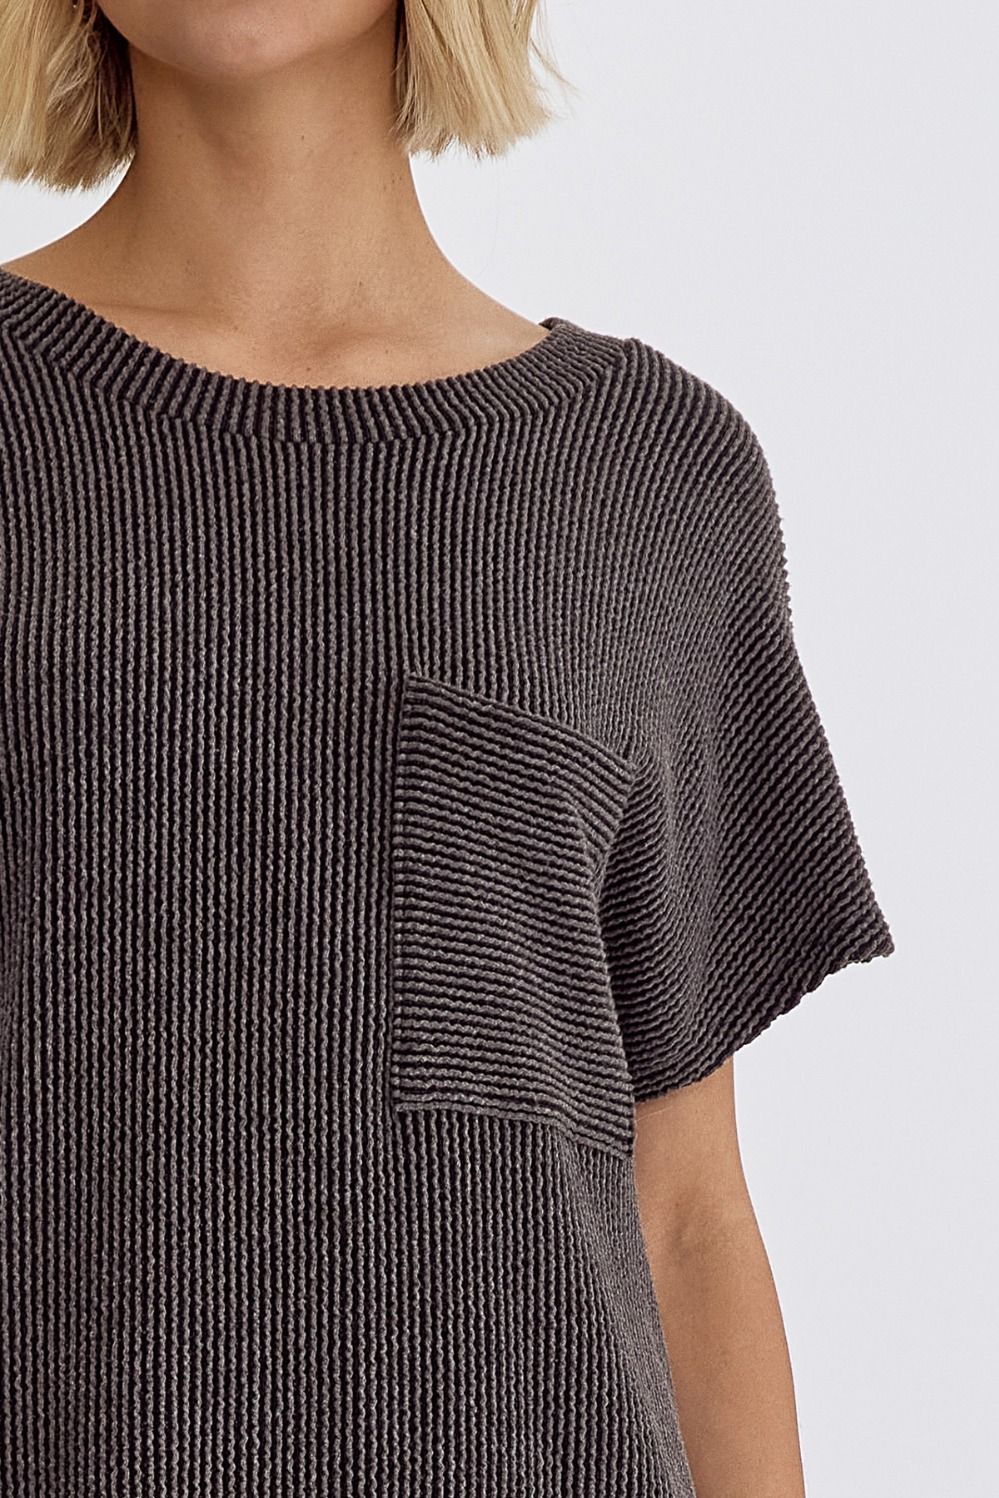 Entro | Charcoal T-Shirt Dress | Sweetest Stitch Online Boutique